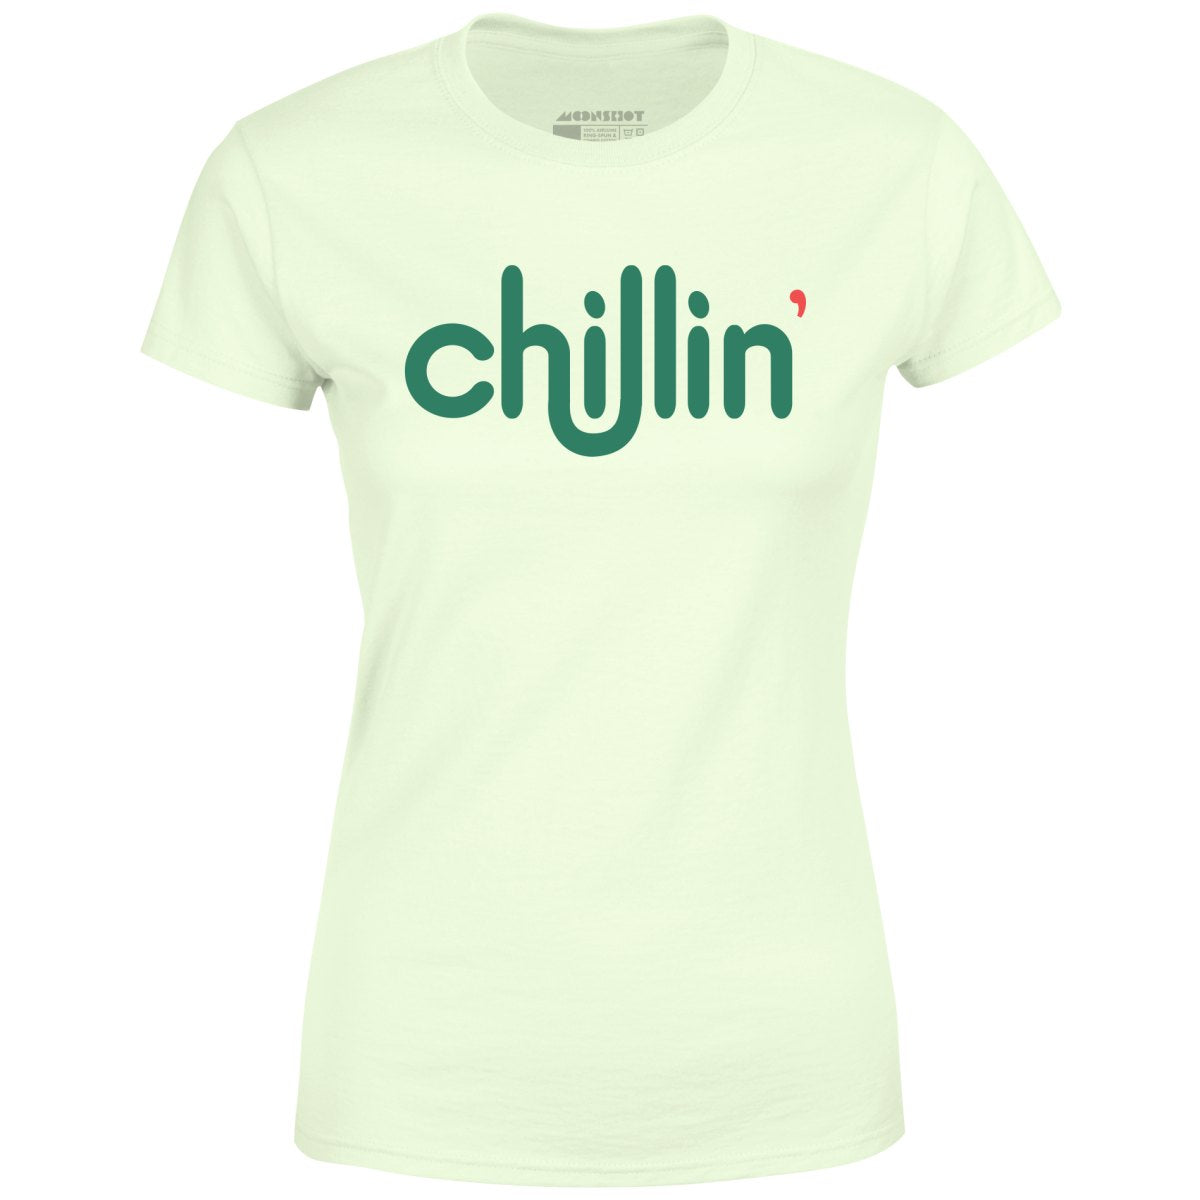 Chillin' - Women's T-Shirt